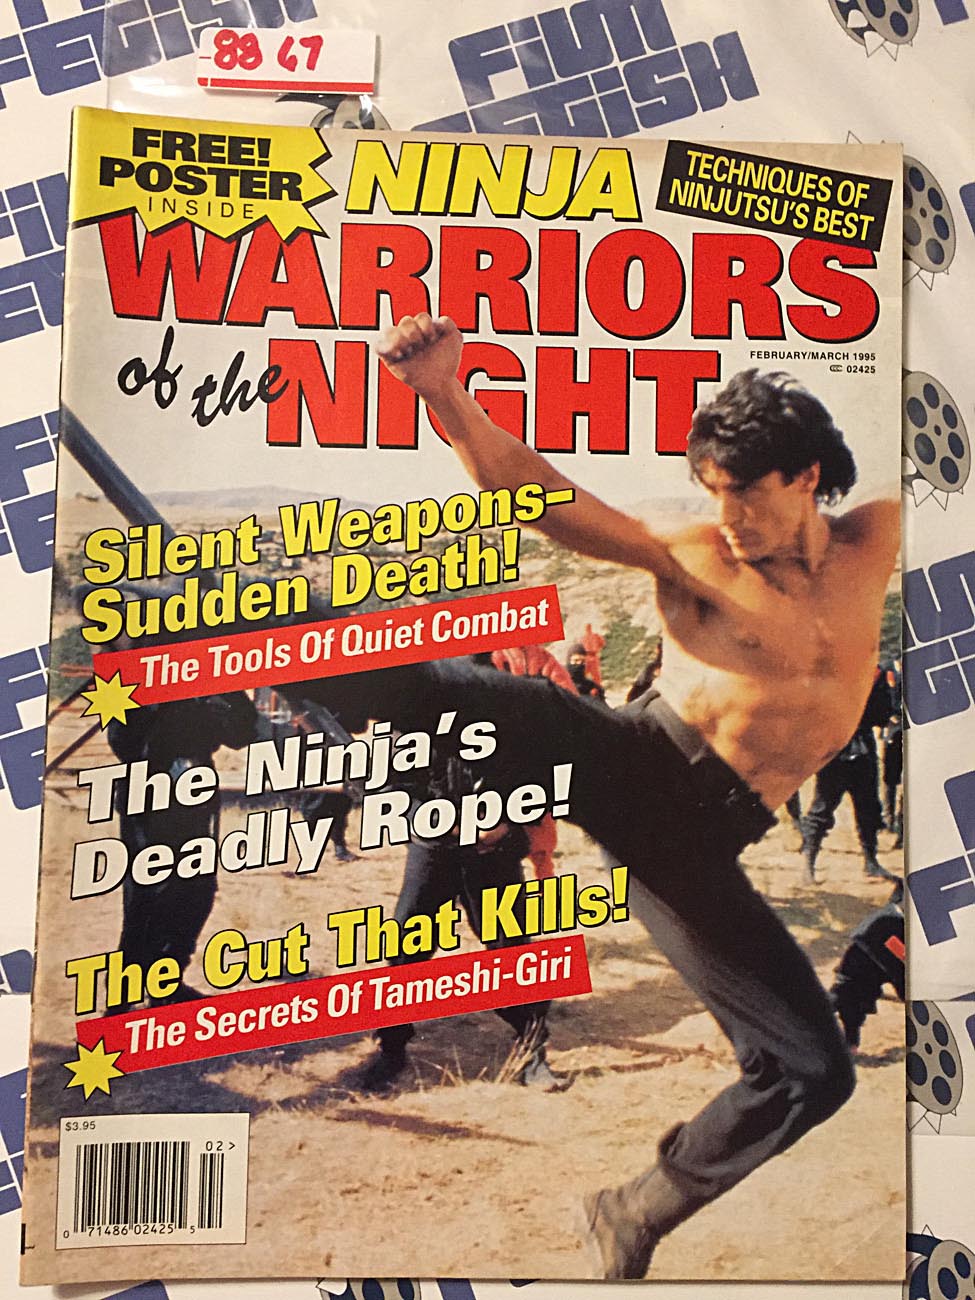 Ninja Warriors of the Night Magazine Ninjutsu’s Best Techniques (Feb/Mar 1995) [8867]